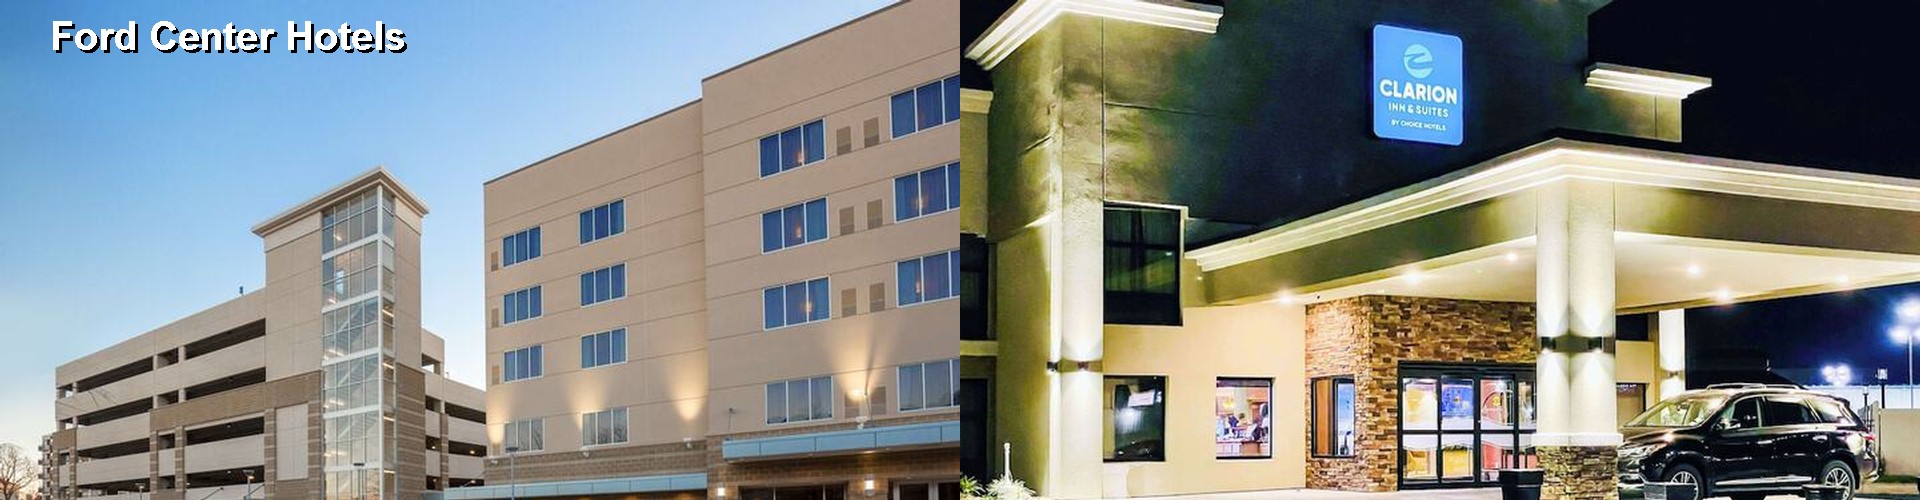 5 Best Hotels near Ford Center